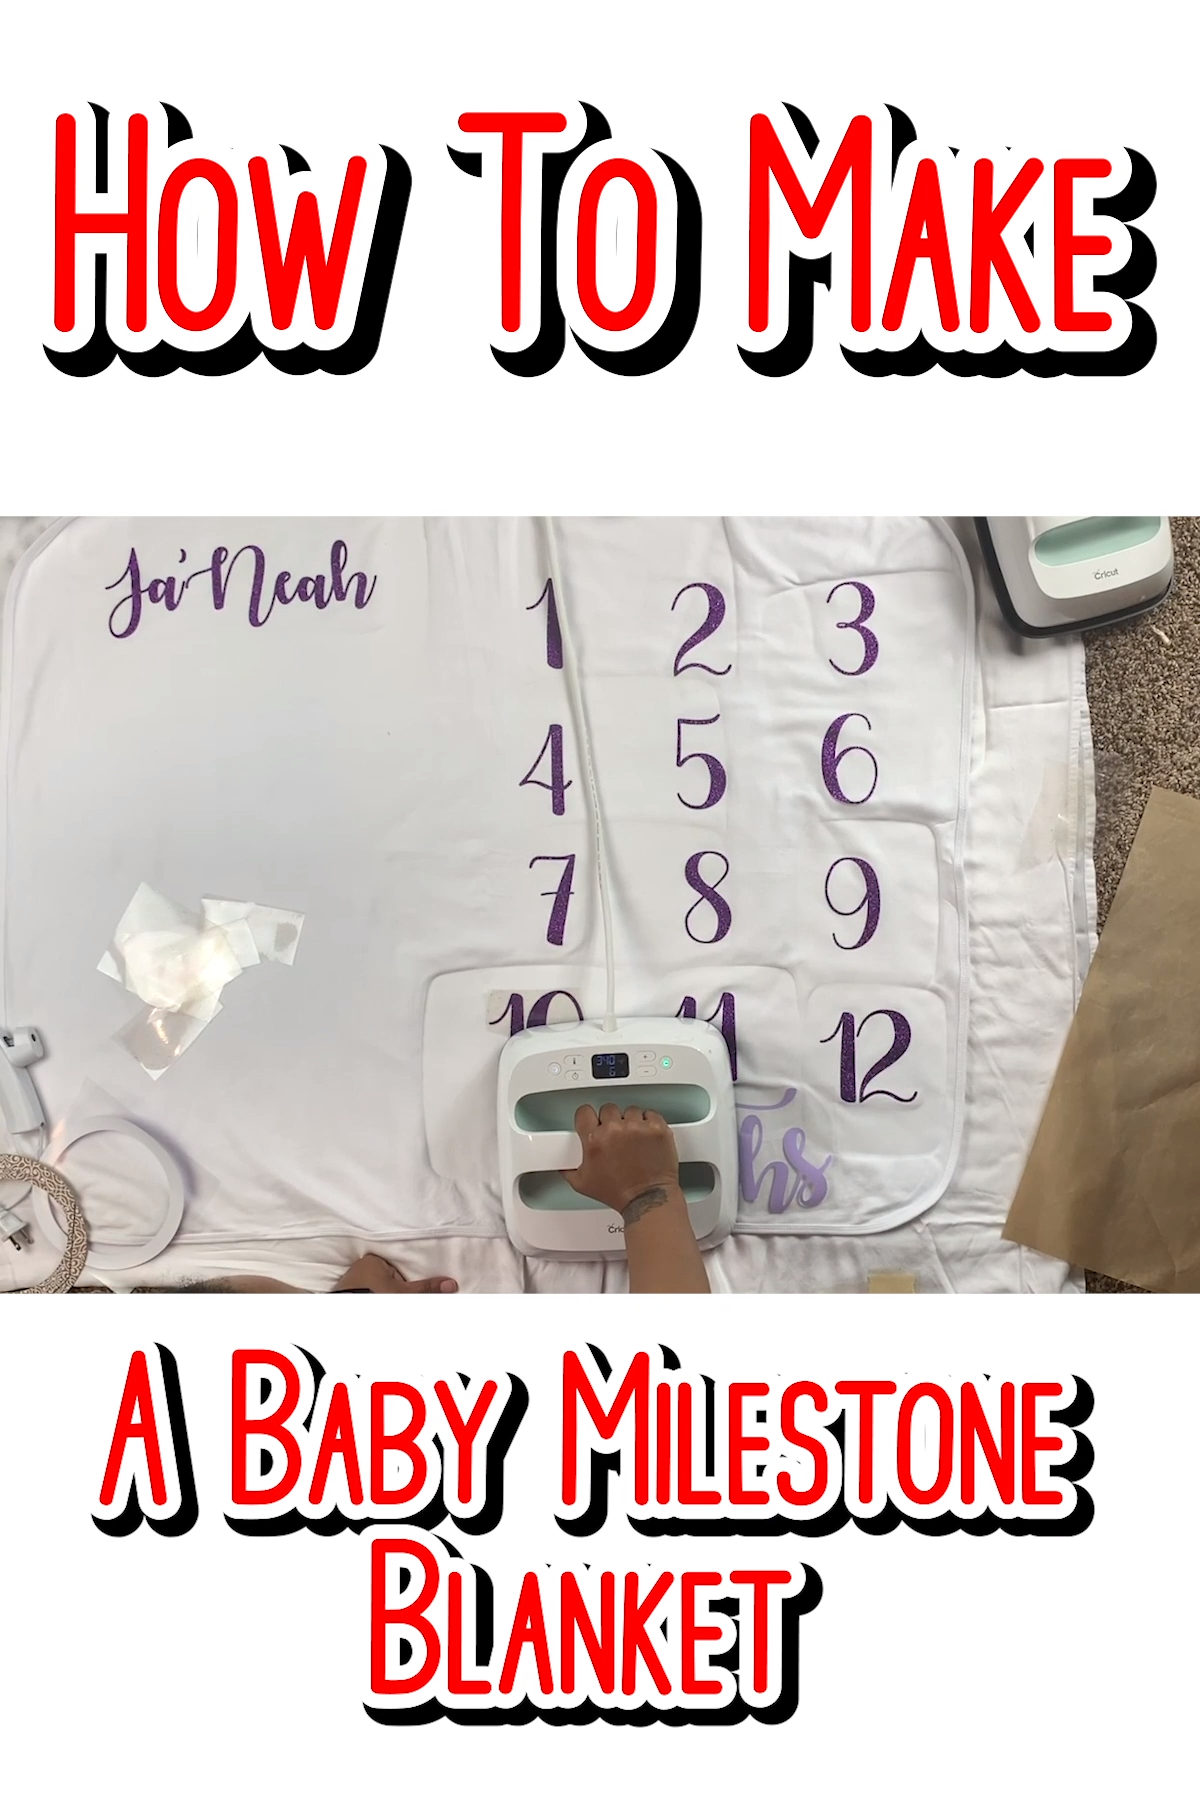 How To Make A Baby Milestone Blanket -   diy Baby stuff